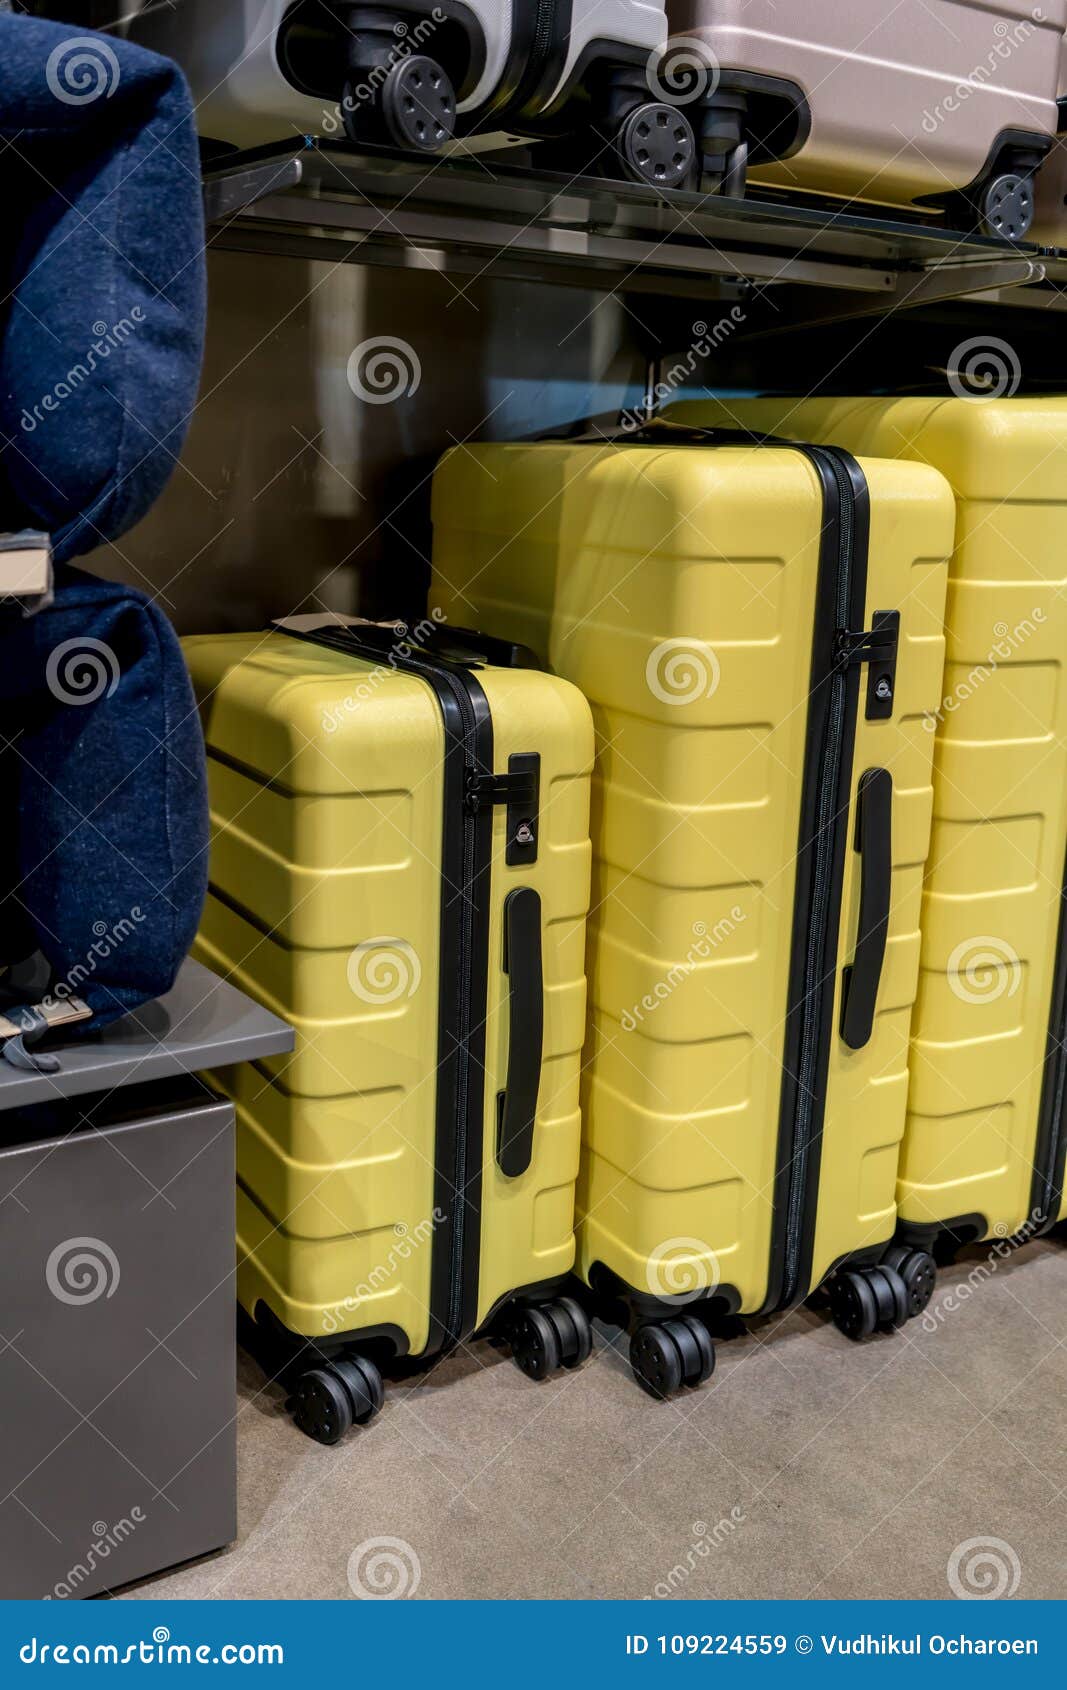 maletas plasticas de viaje